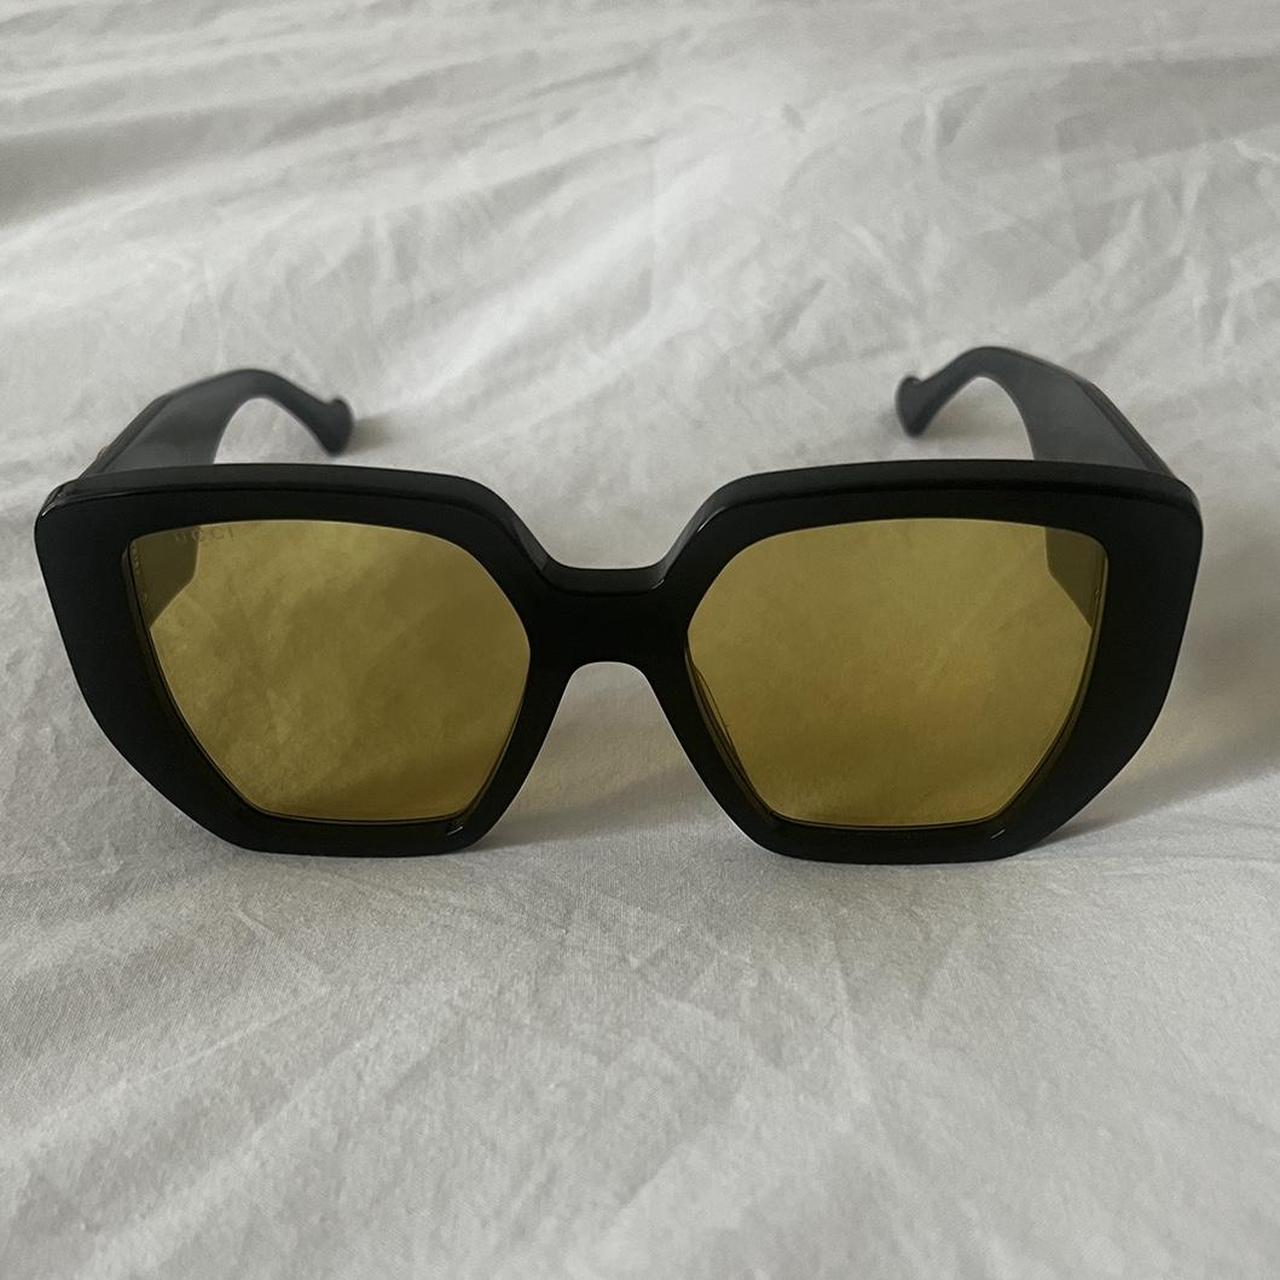 Gucci Women's Black and Yellow Sunglasses (2)